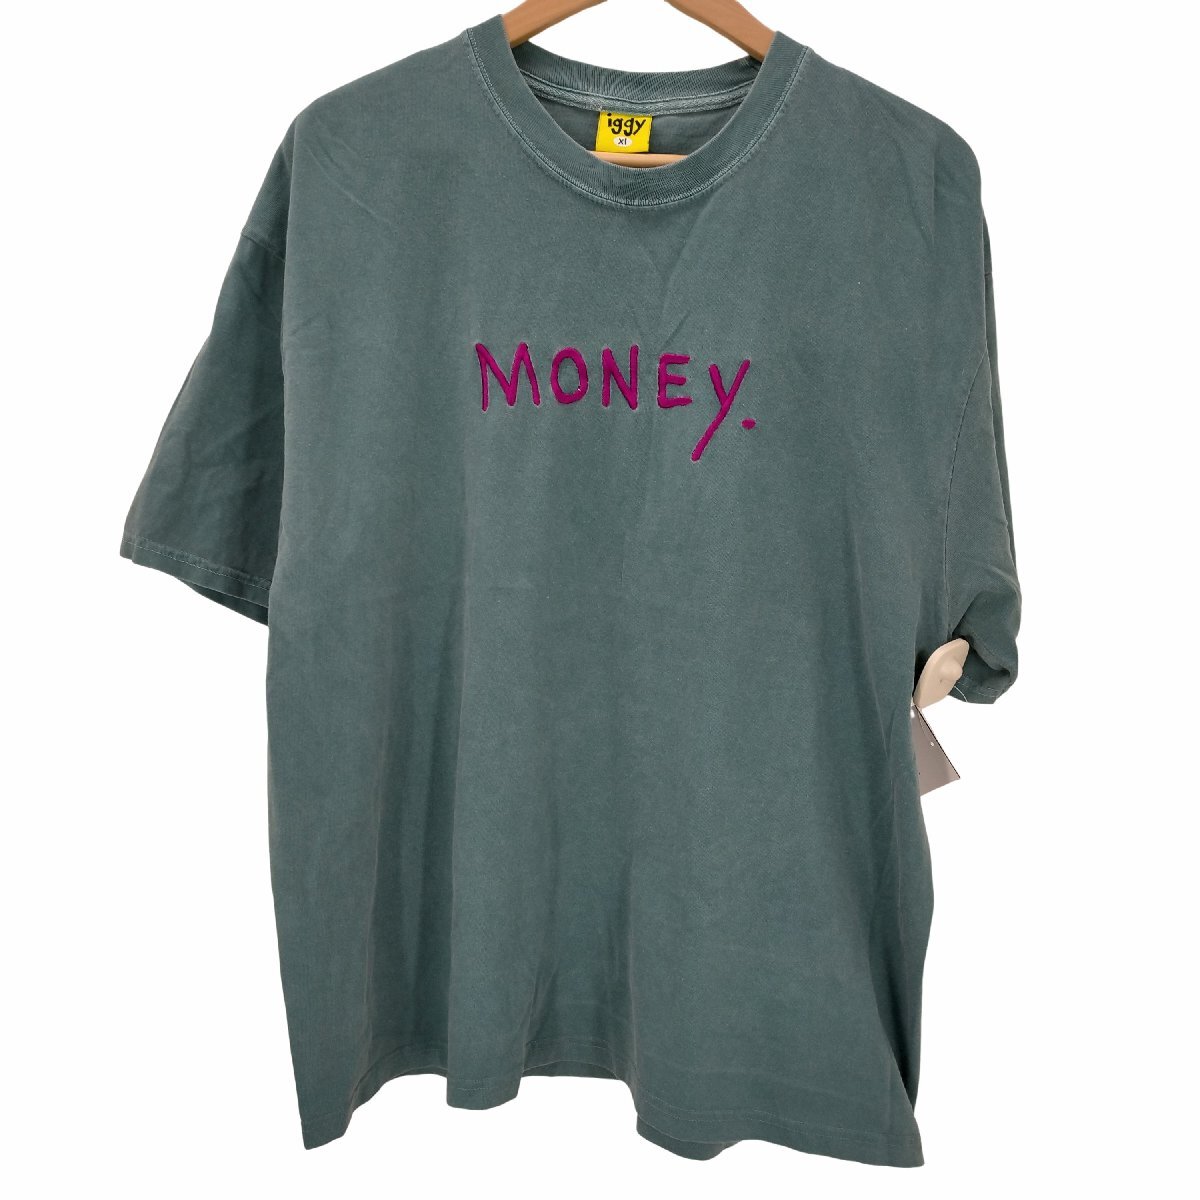 iggy(イギー) MONEY. 刺繍 半袖Tシャツ メンズ import：XL 中古 古着 0223_画像1